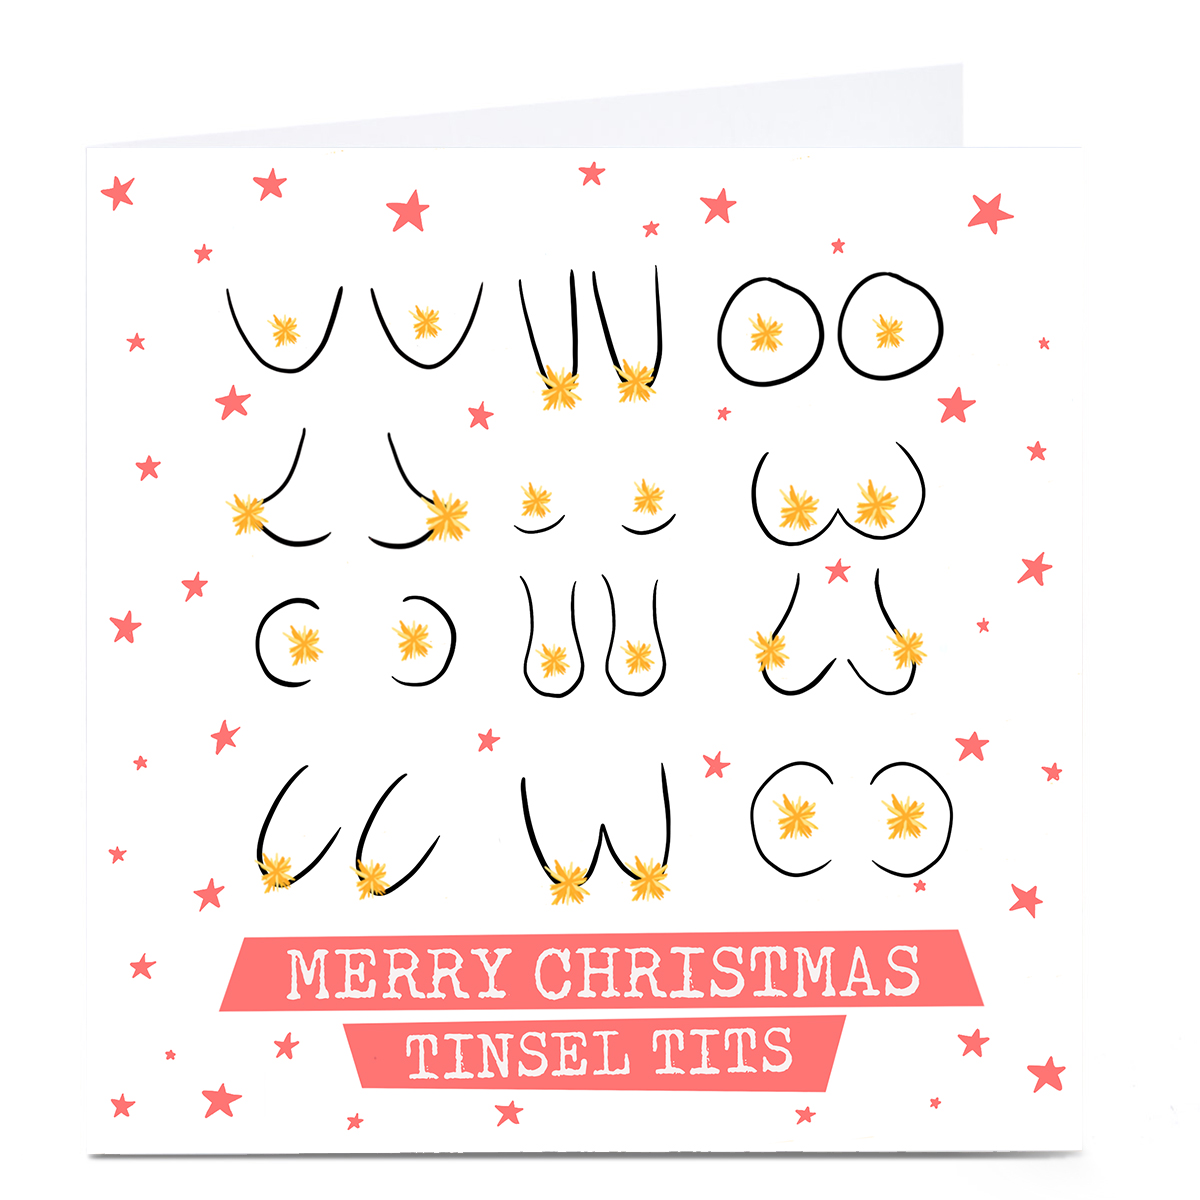 Personalised Phoebe Munger Christmas Card - Tinsel Tits